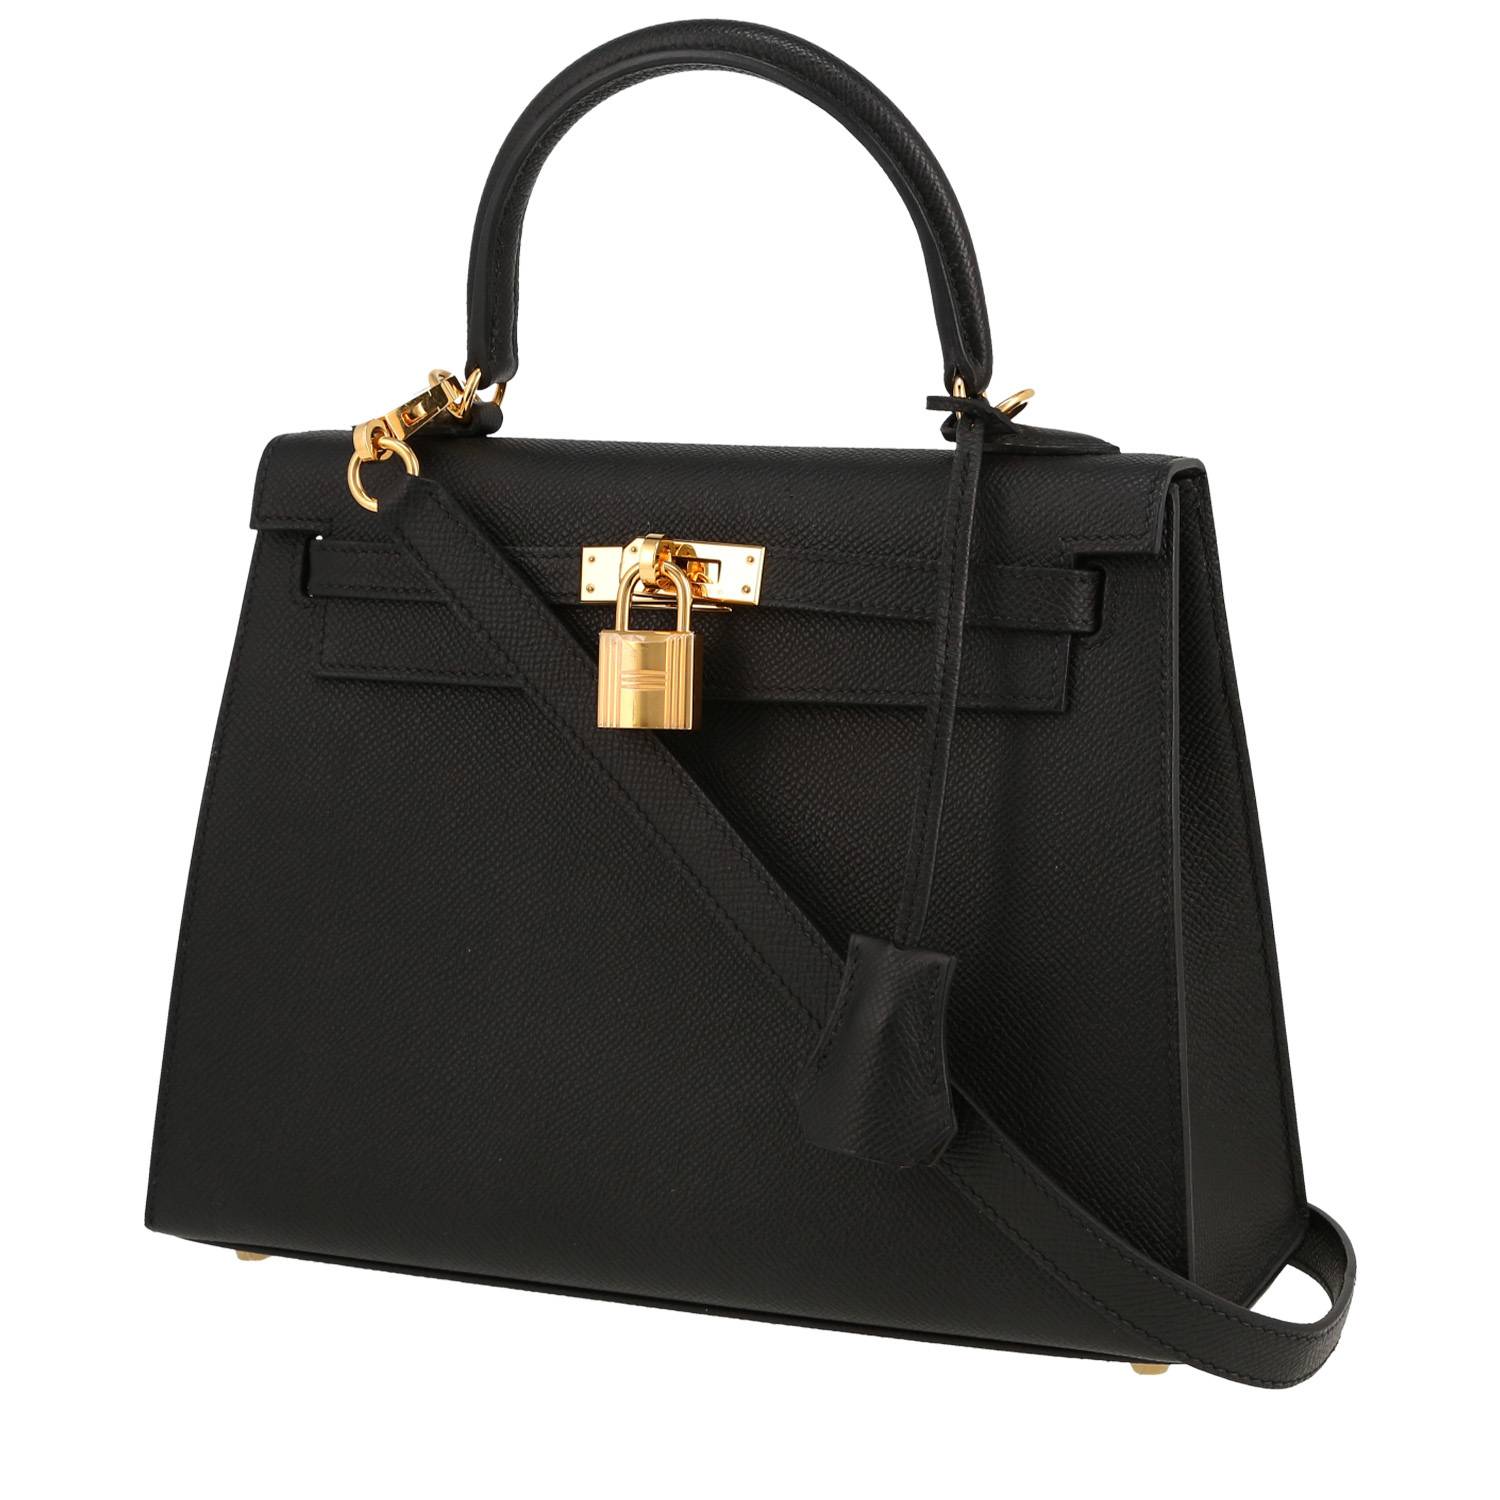 Kelly 25 cm Handbag In Black Epsom Leather